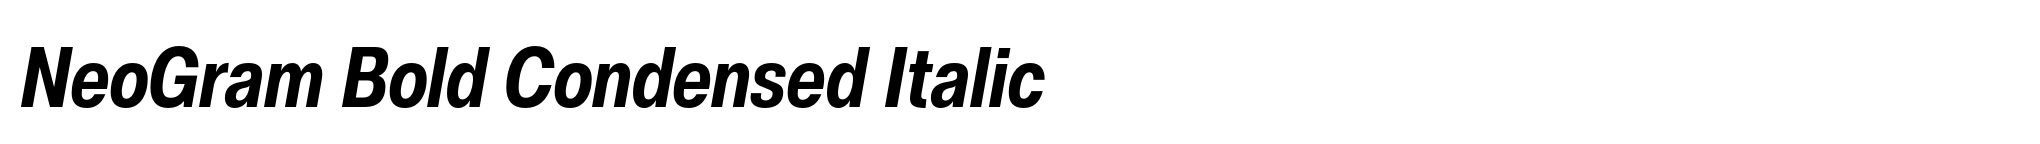 NeoGram Bold Condensed Italic image